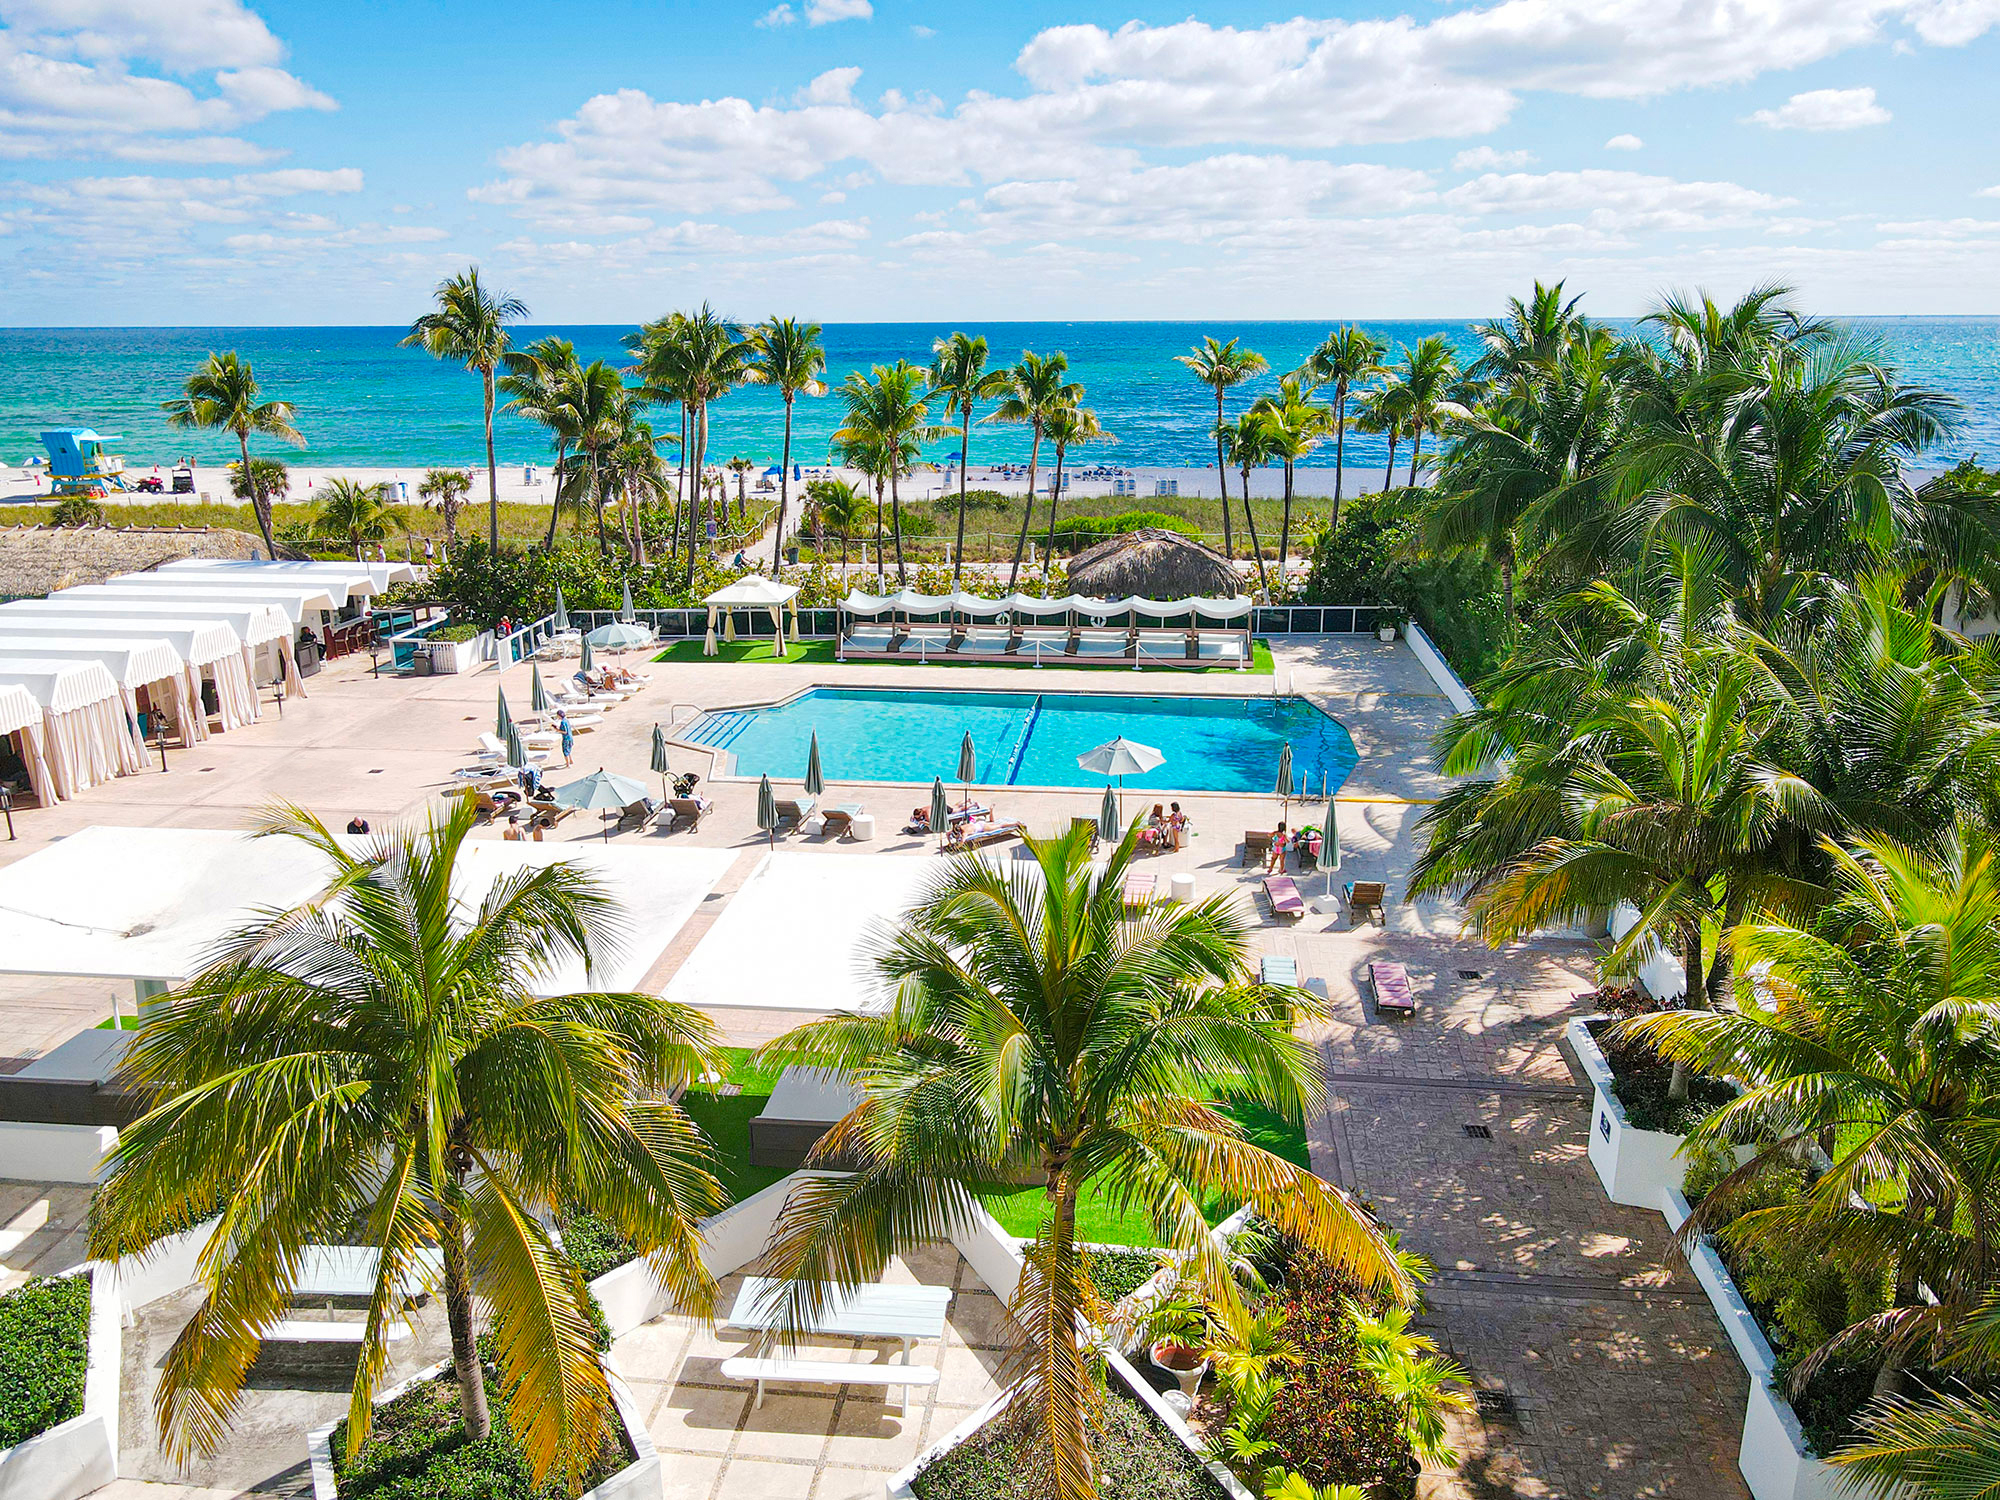 Seacoast Suites Miami Beach